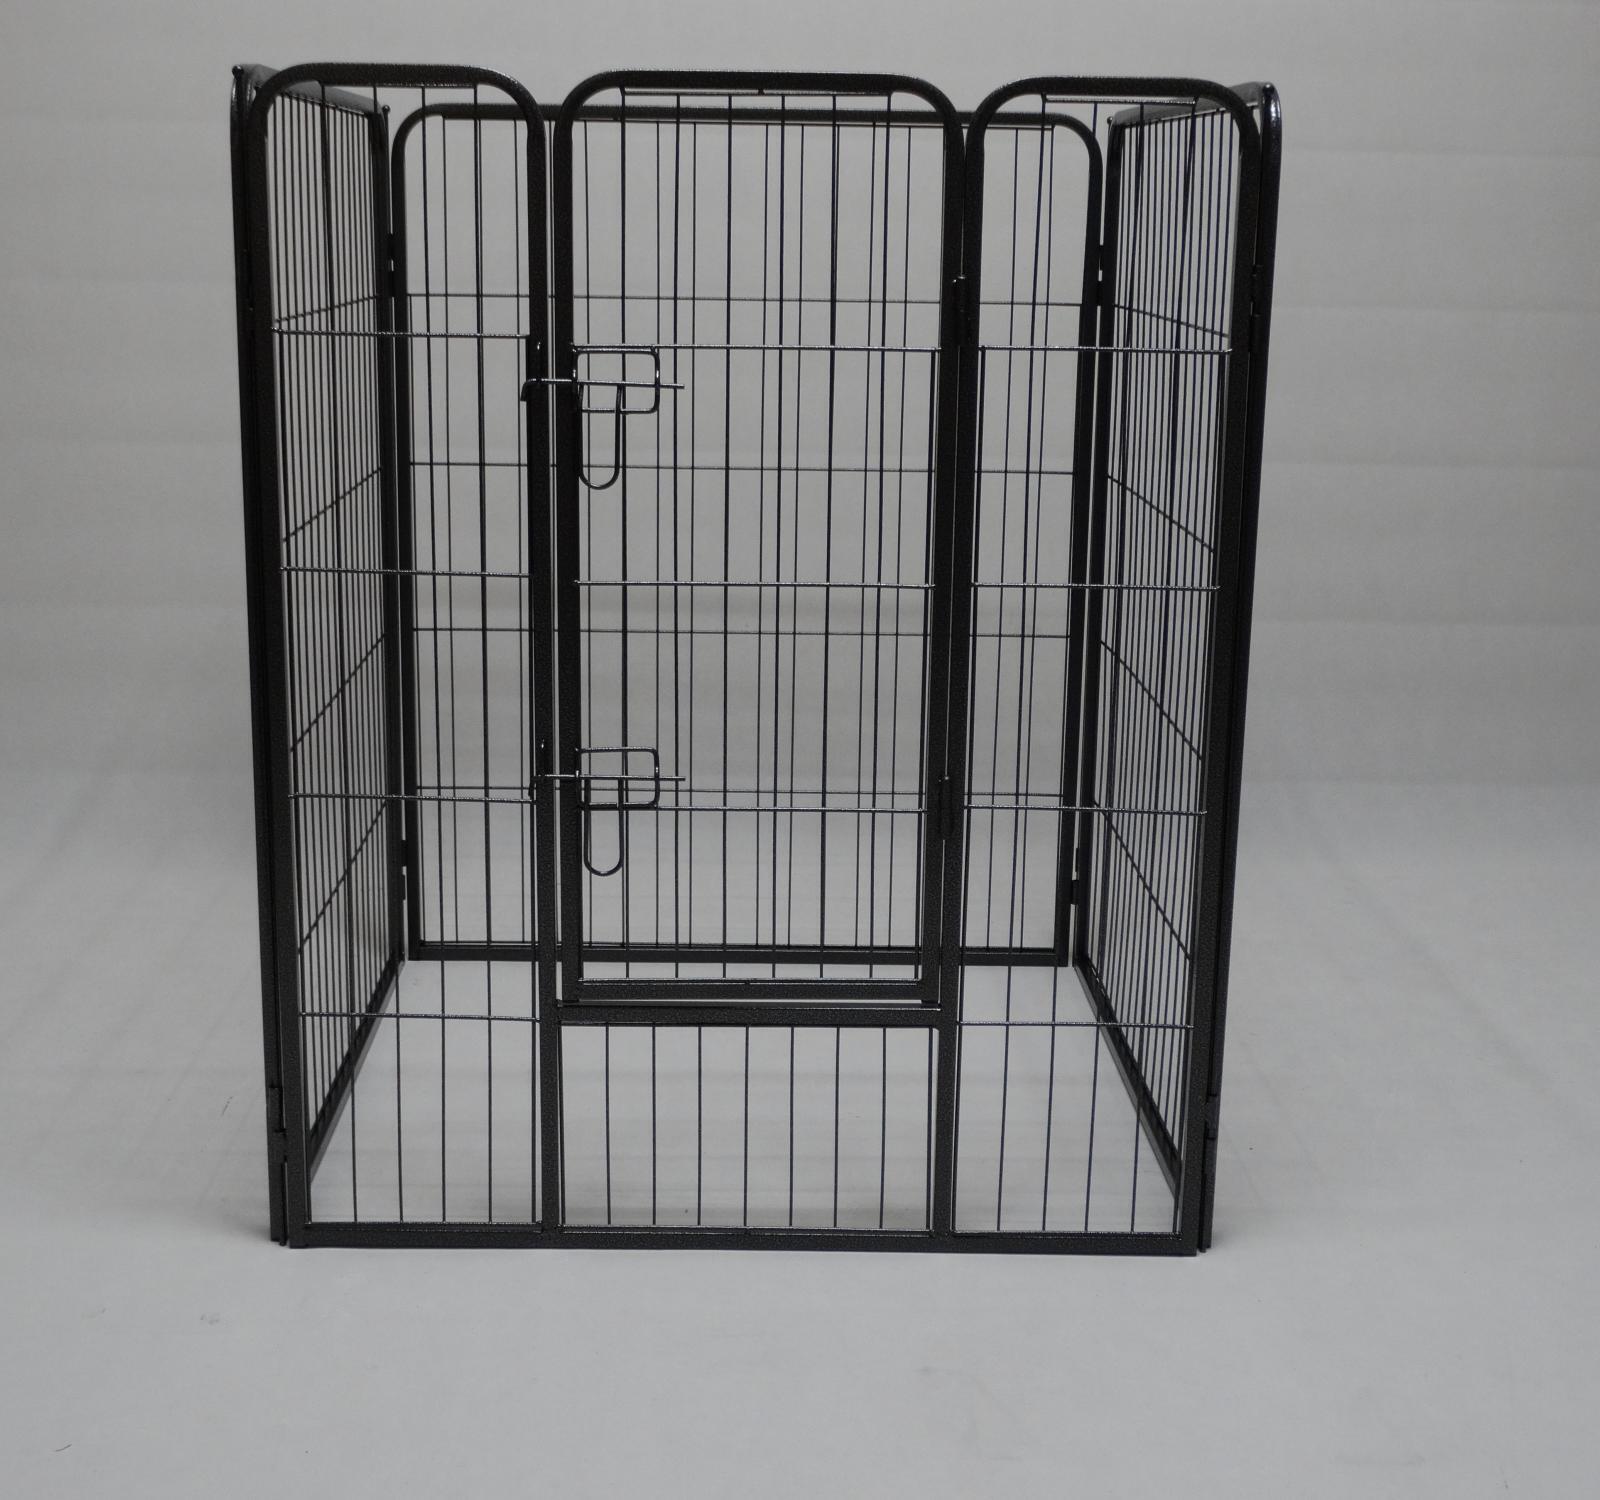 4 Panels Heavy Duty Pet Dog Cat Rabbit Exercise Playpen Fence Extension | 100cm